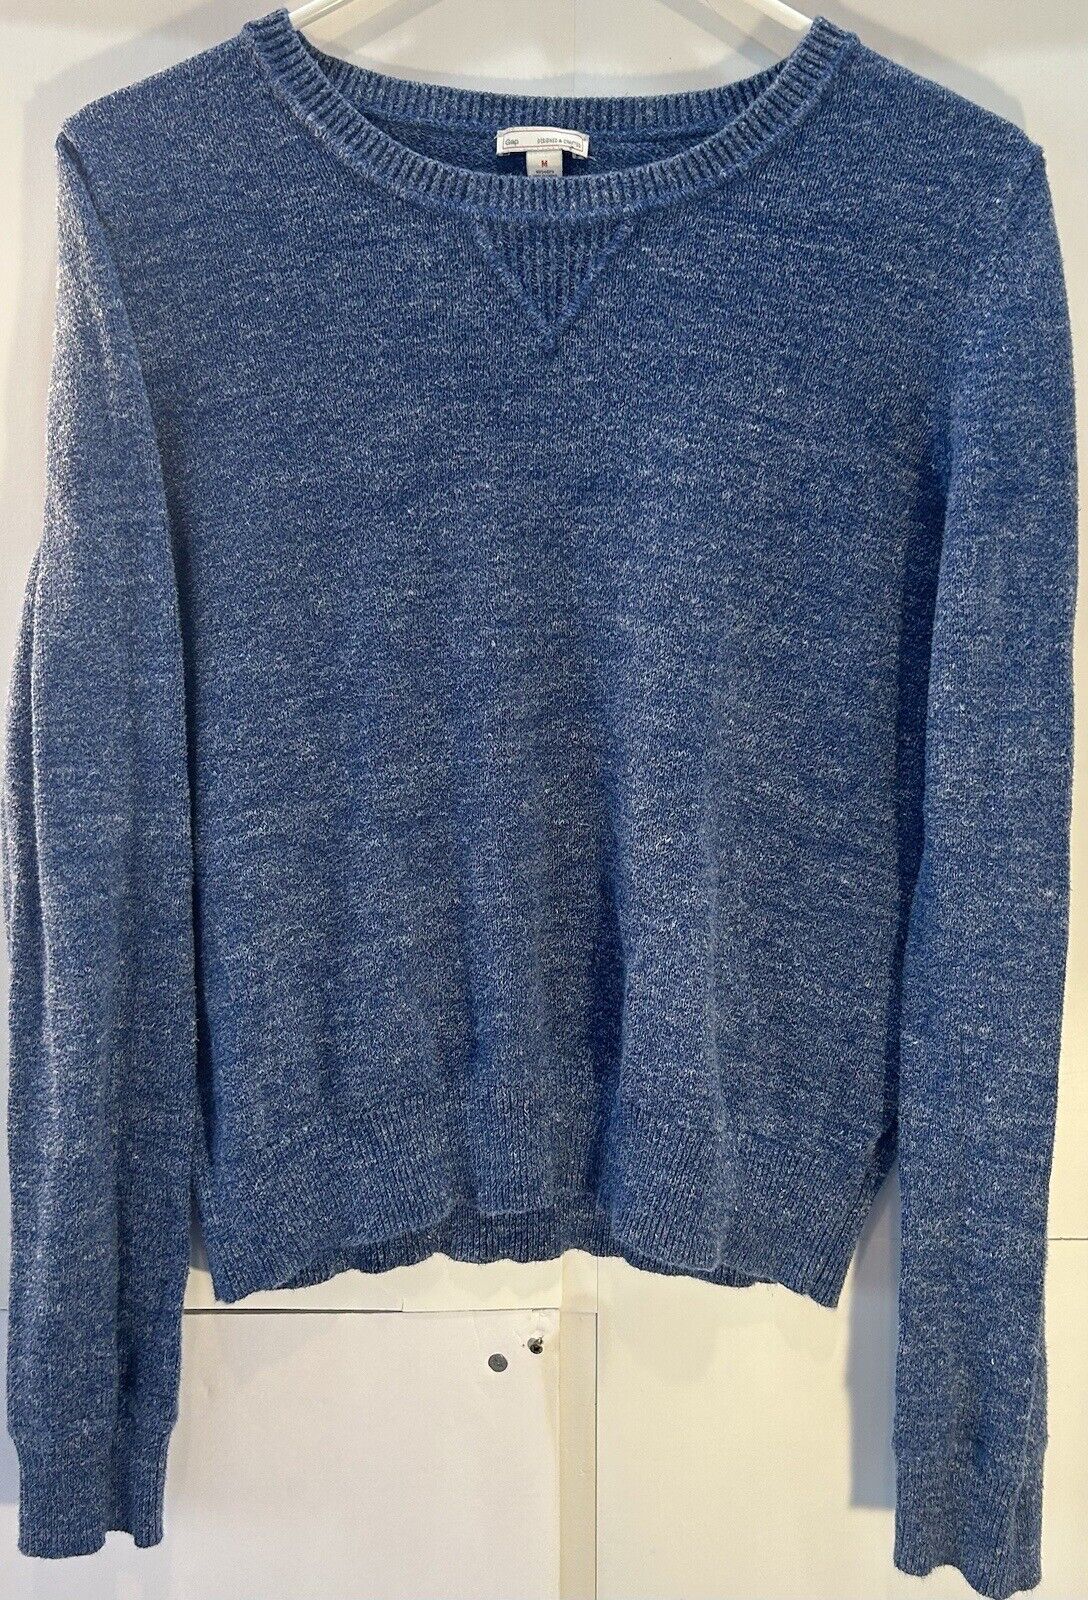 Gap Clothing Co. Vintage 80s Blue Wool Crewneck B… - image 1